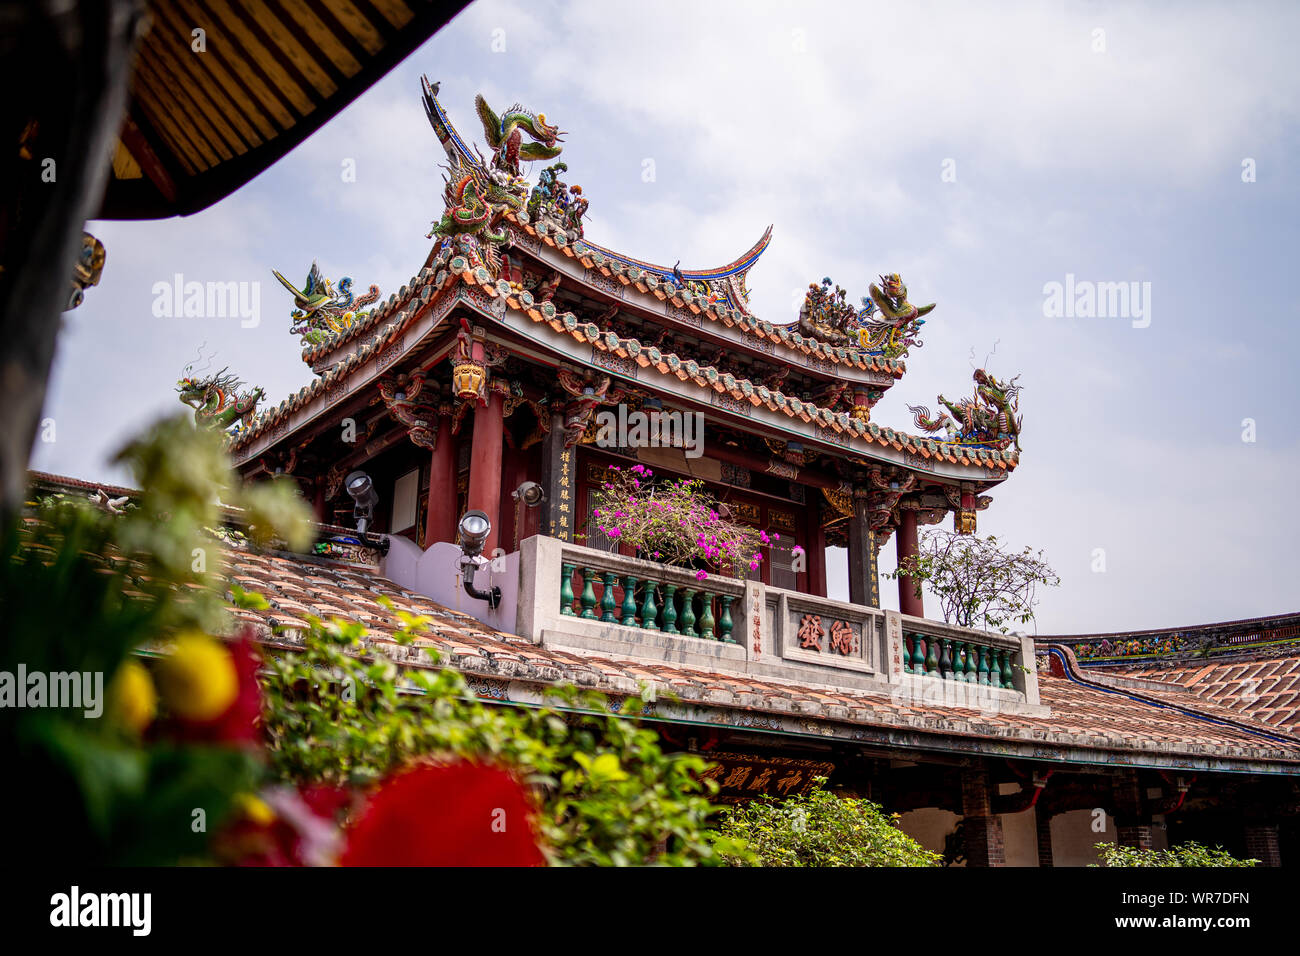 Taipei, Taiwan: wunderschön dekorierten Balkon taoistischer Tempel Dach (Dalongdong Baoan Tempel) mit Drachen Ornamente Stockfoto